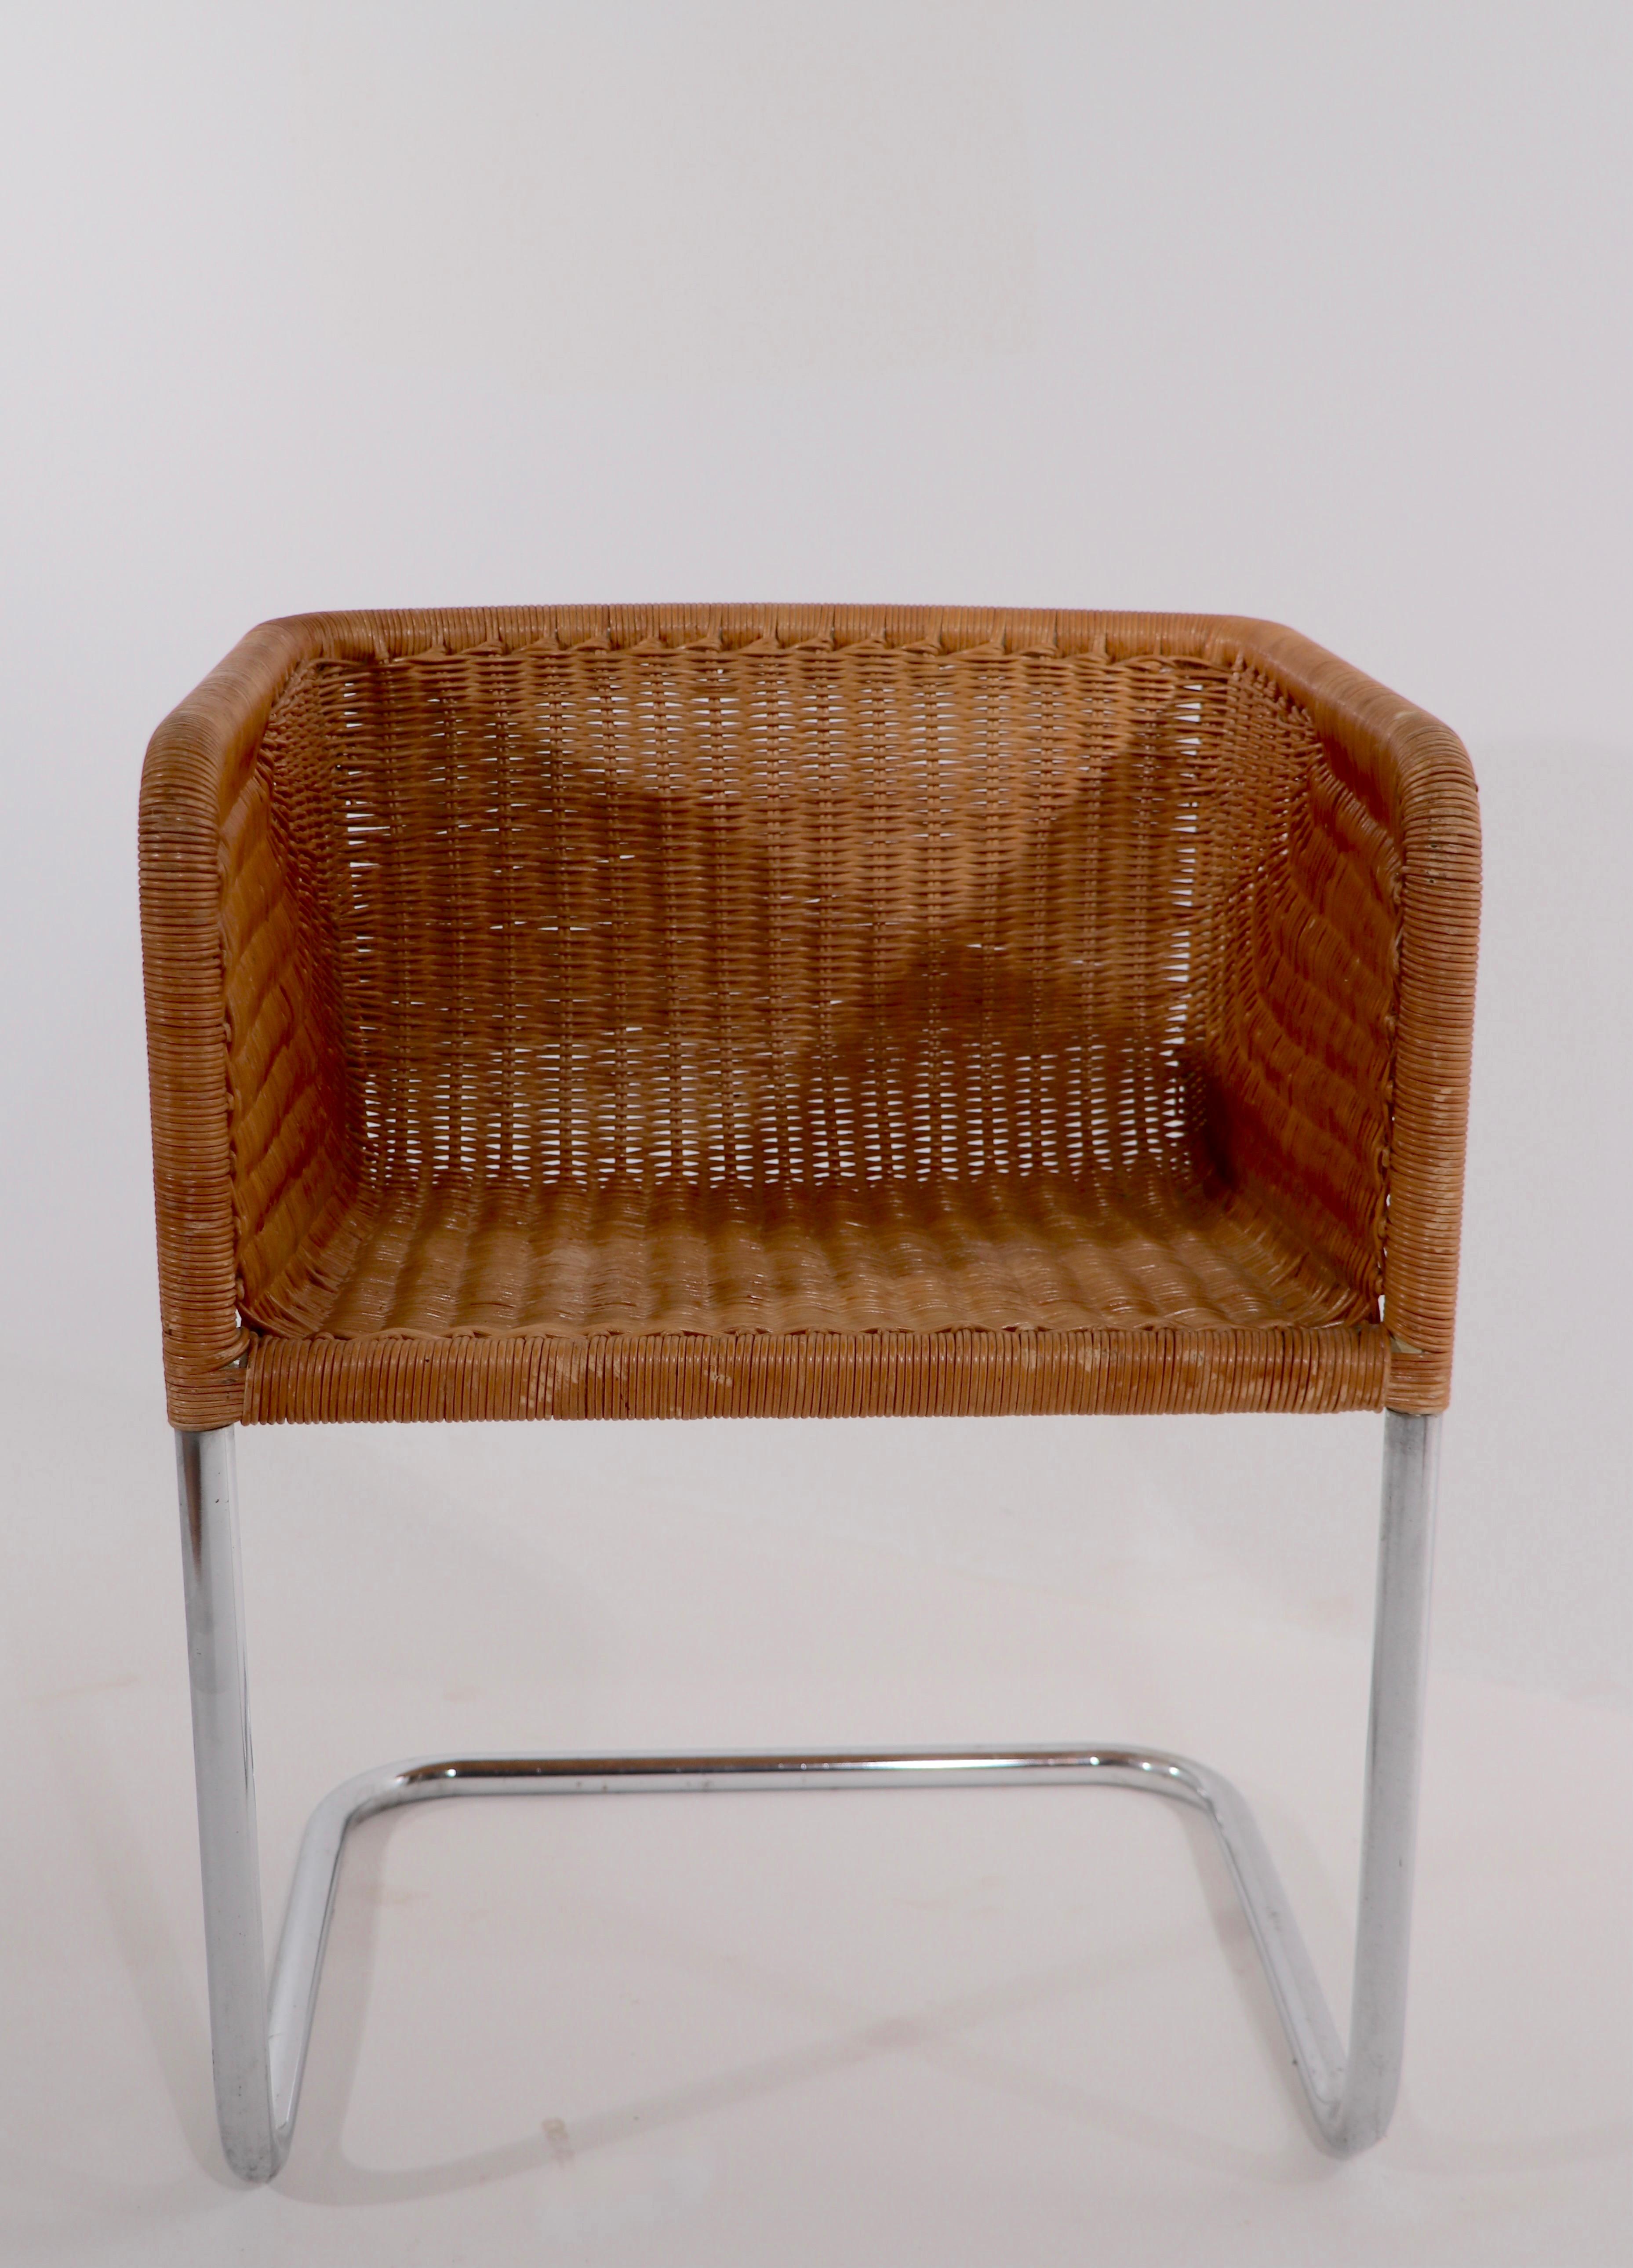 wicker and chrome dining chairs -china -b2b -forum -blog -wikipedia -.cn -.gov -alibaba